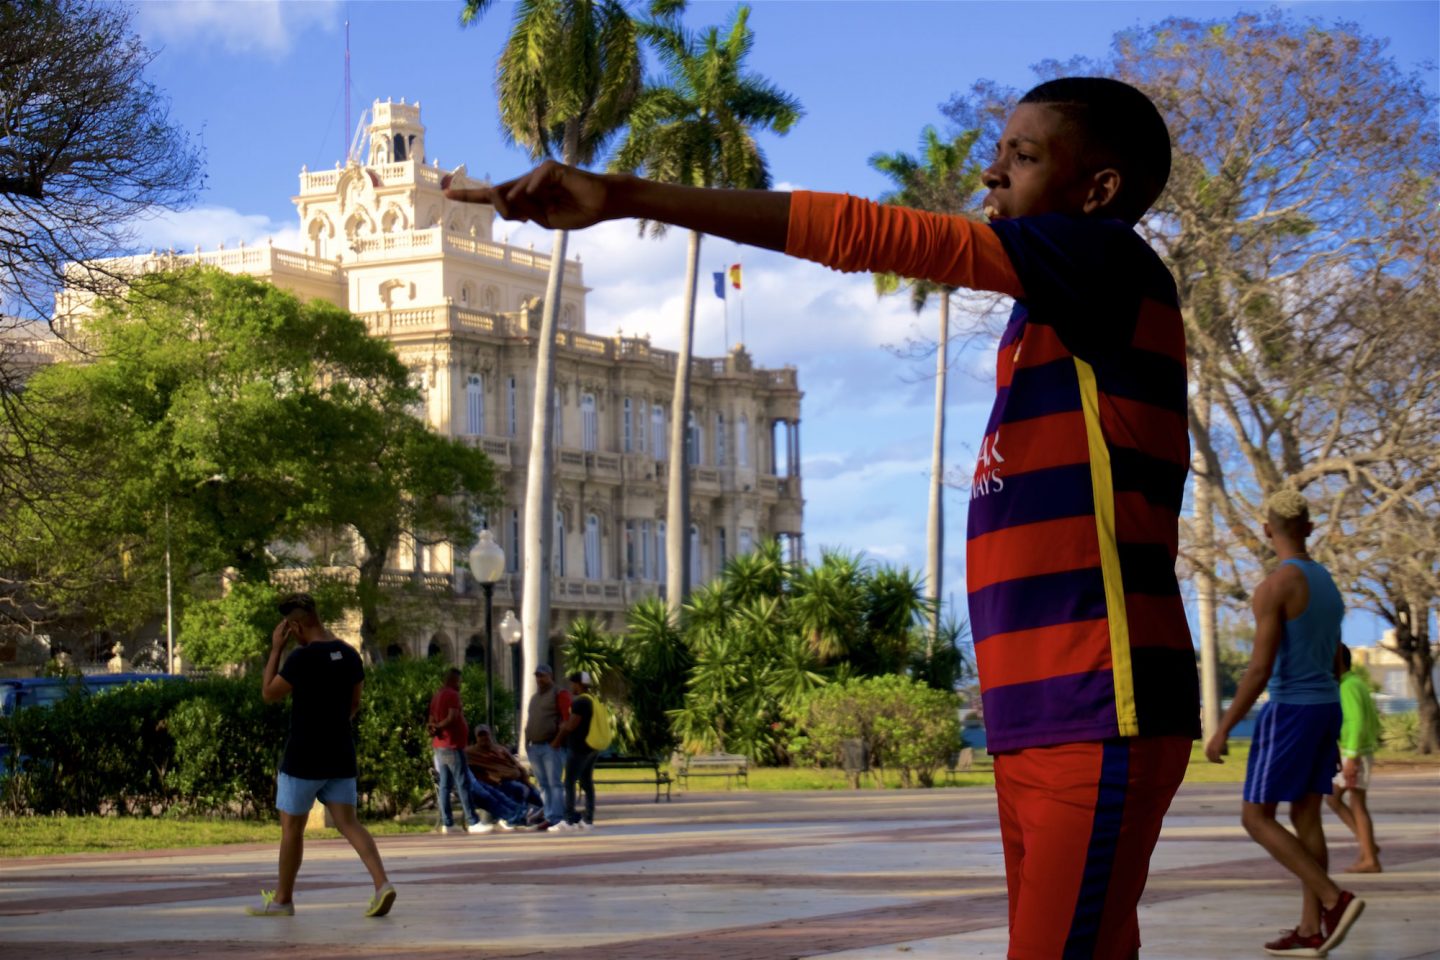 Kids playing soccer in Havana. Daily life in Cuba.